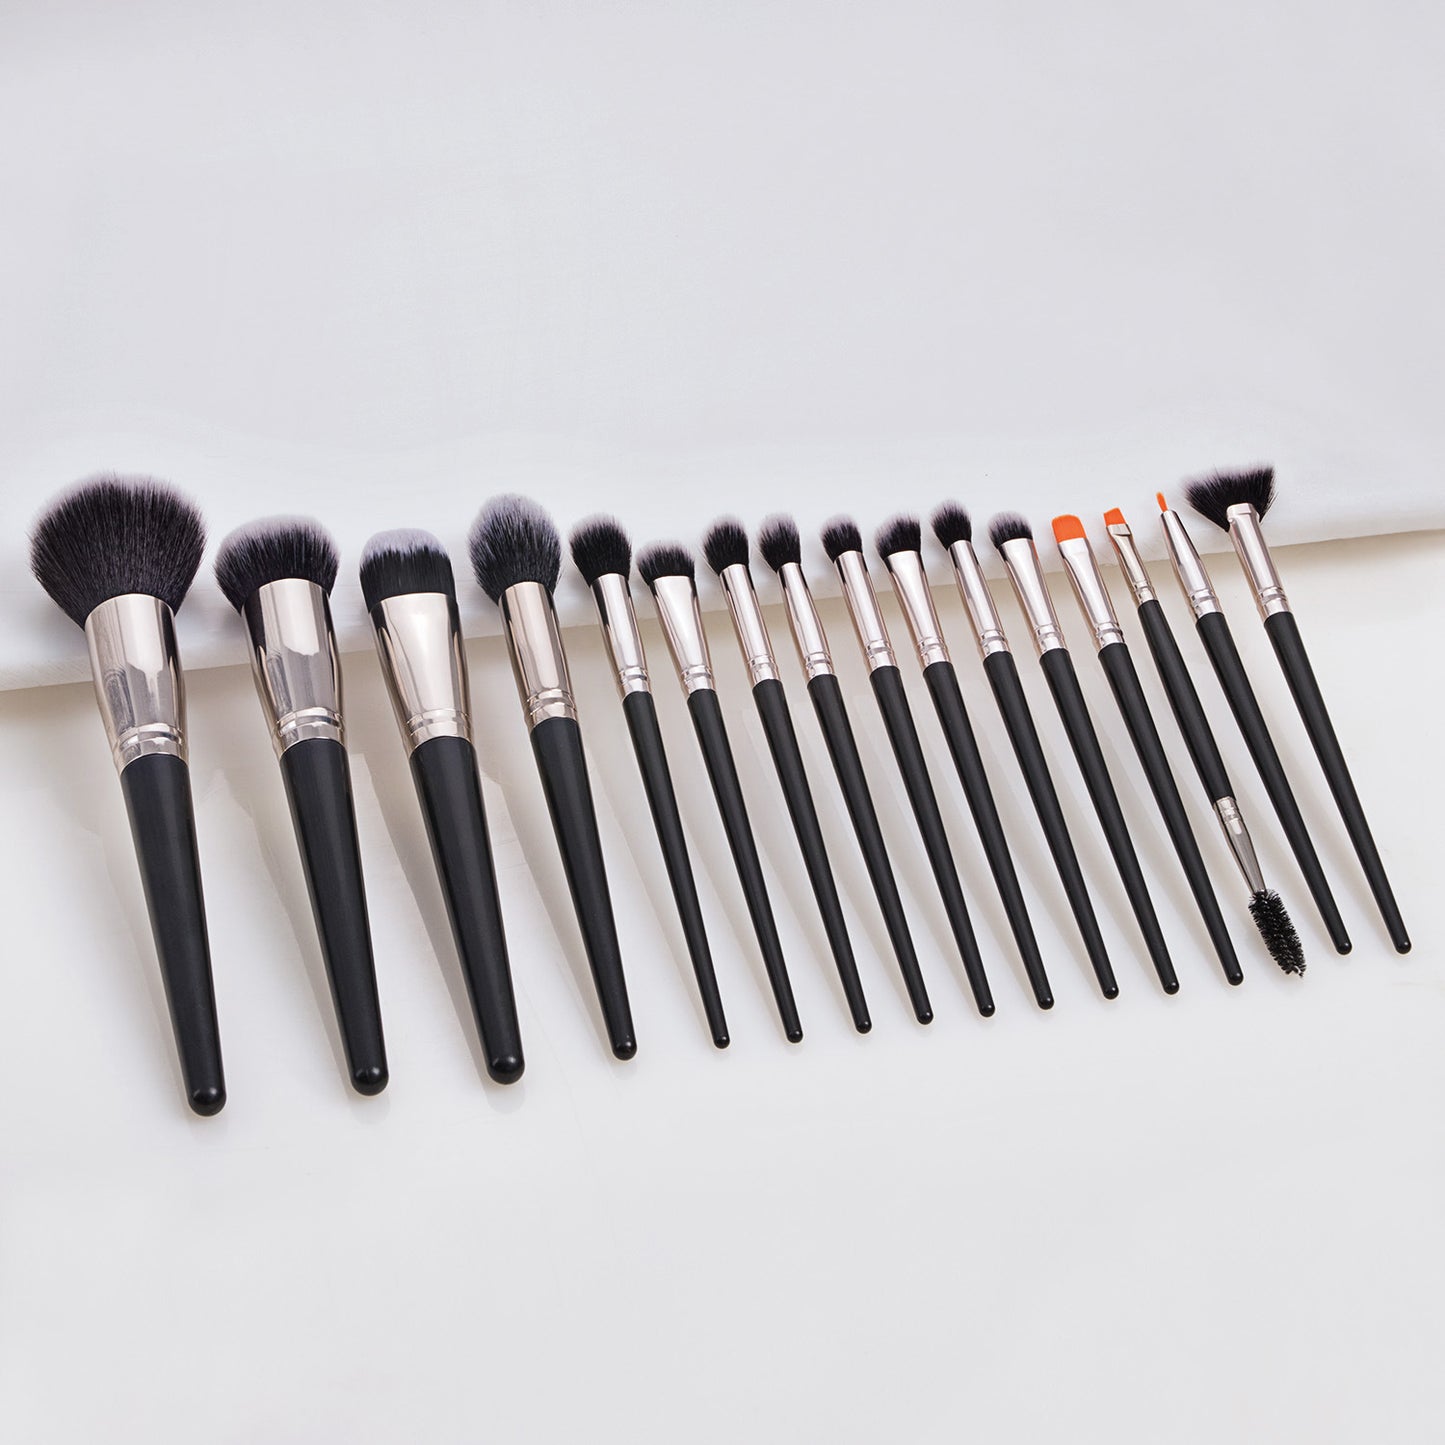 YT Beauty 16 PCS makeup brush set black makeup foundation brush